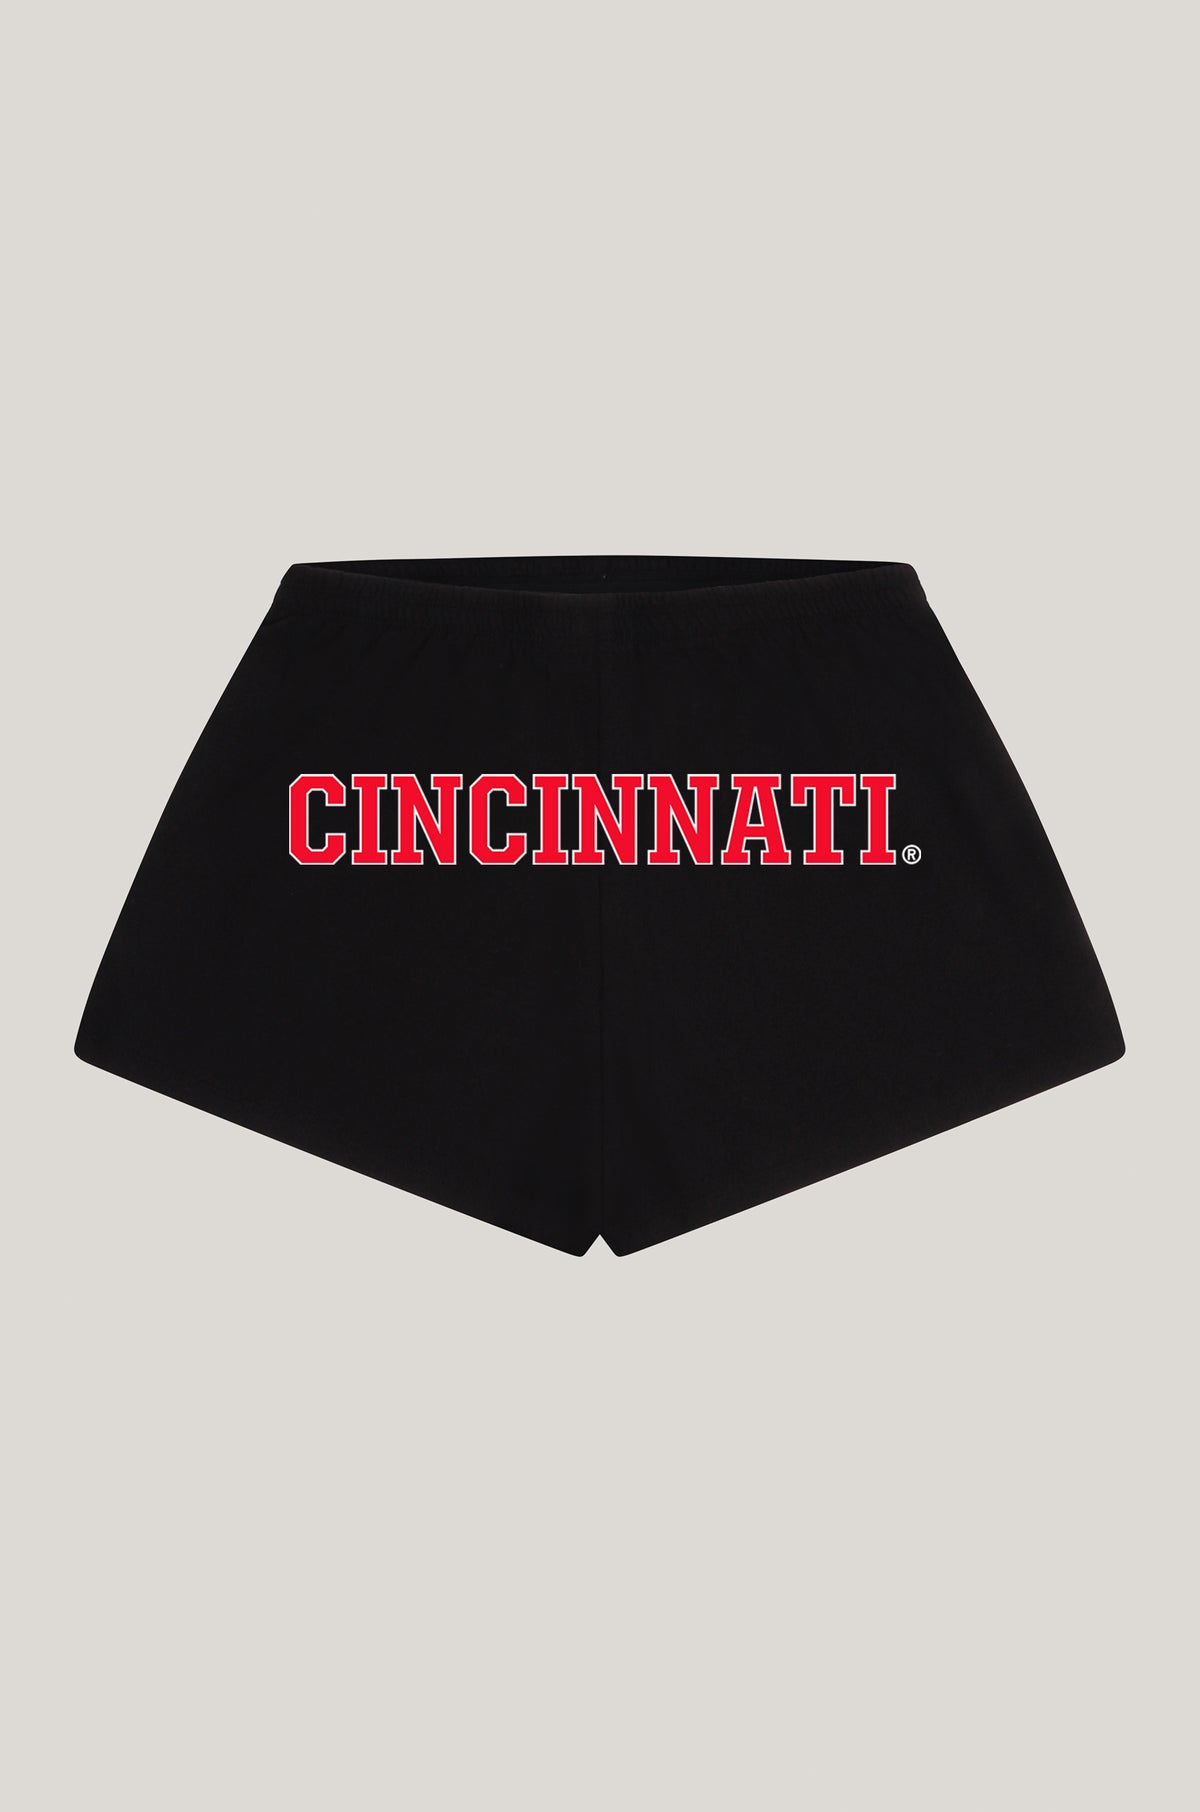 Cincinnati P.E. Shorts